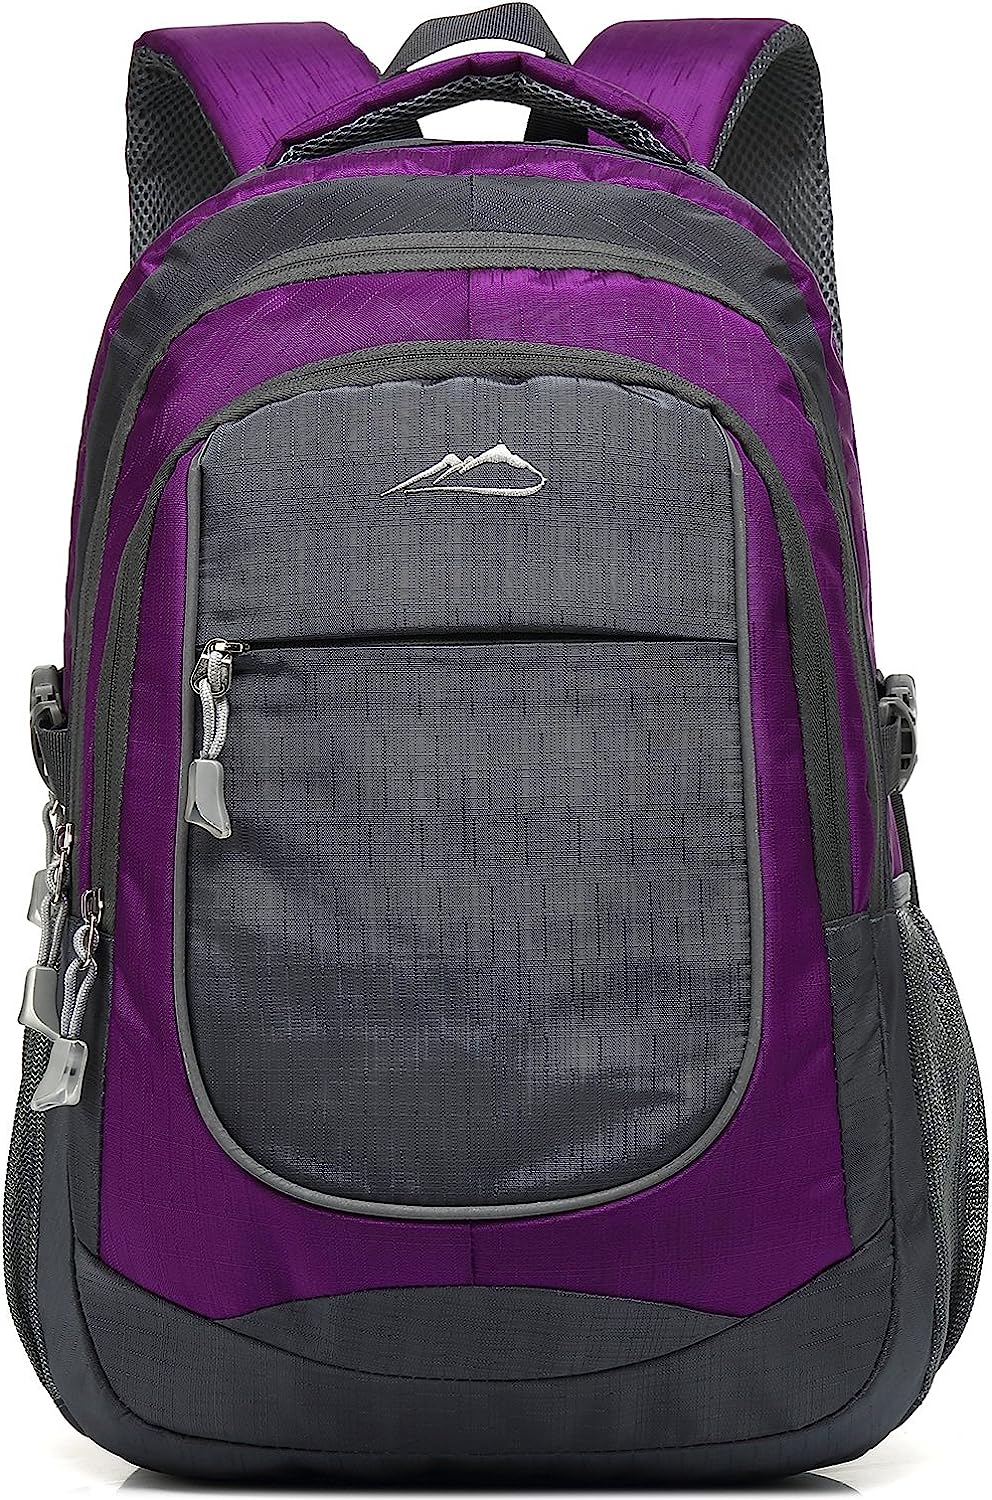 ProEtrade Backpack Bookbag for College Travel Business [...]